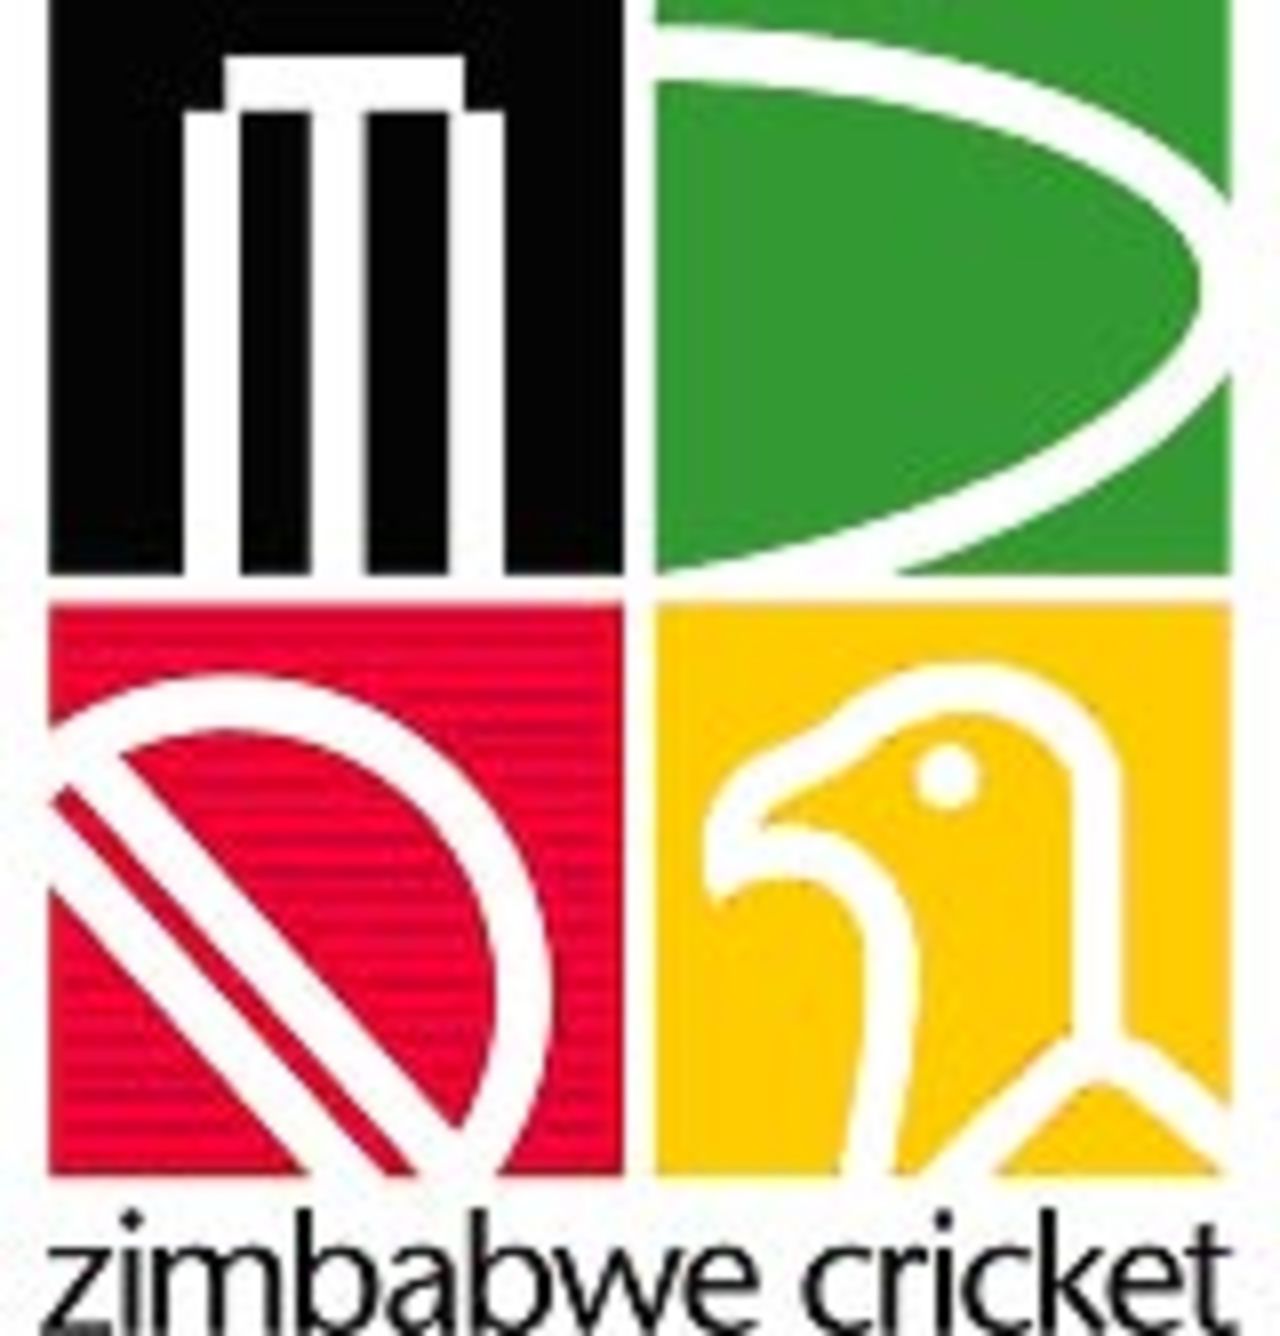 New ZC logo is unveiled, November 2004